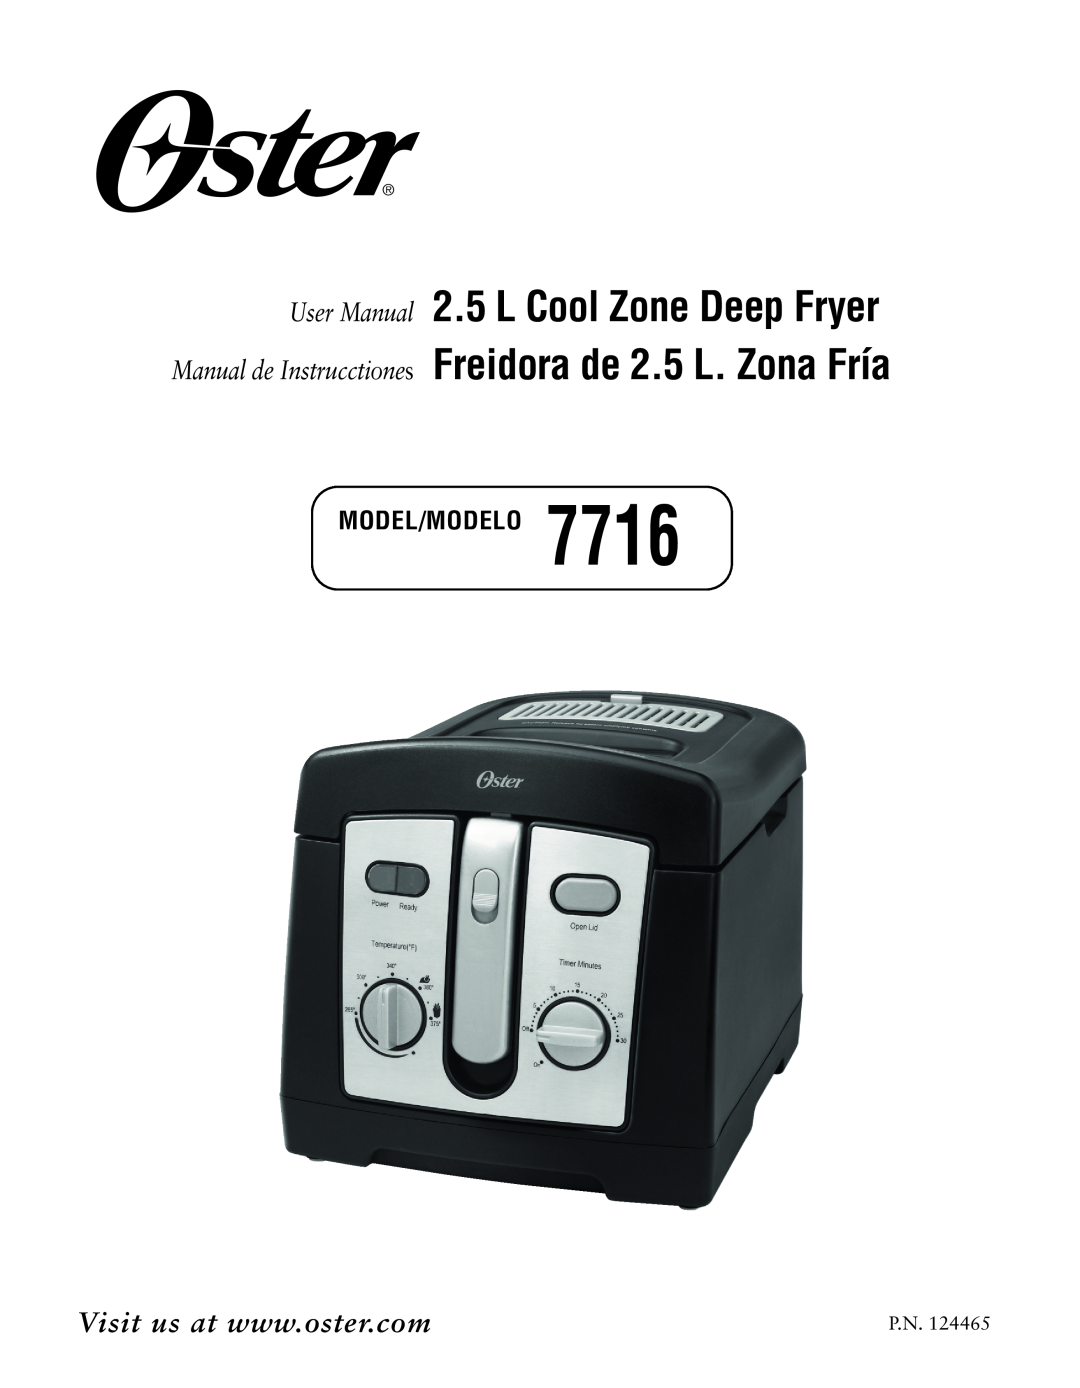 Oster 124465 user manual Manual de Instrucctiones, Model/Modelo 